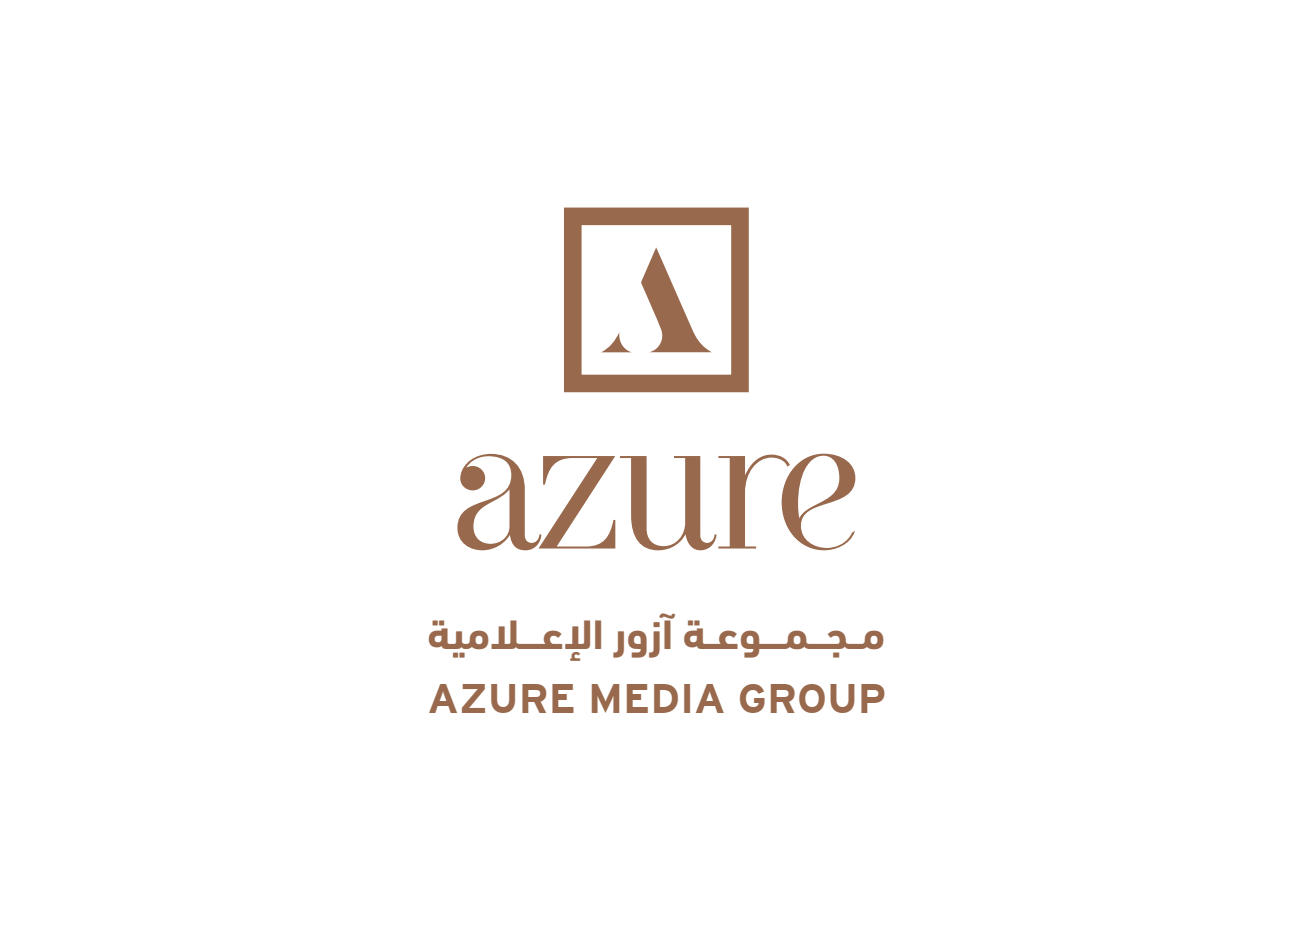 Azure Media Group